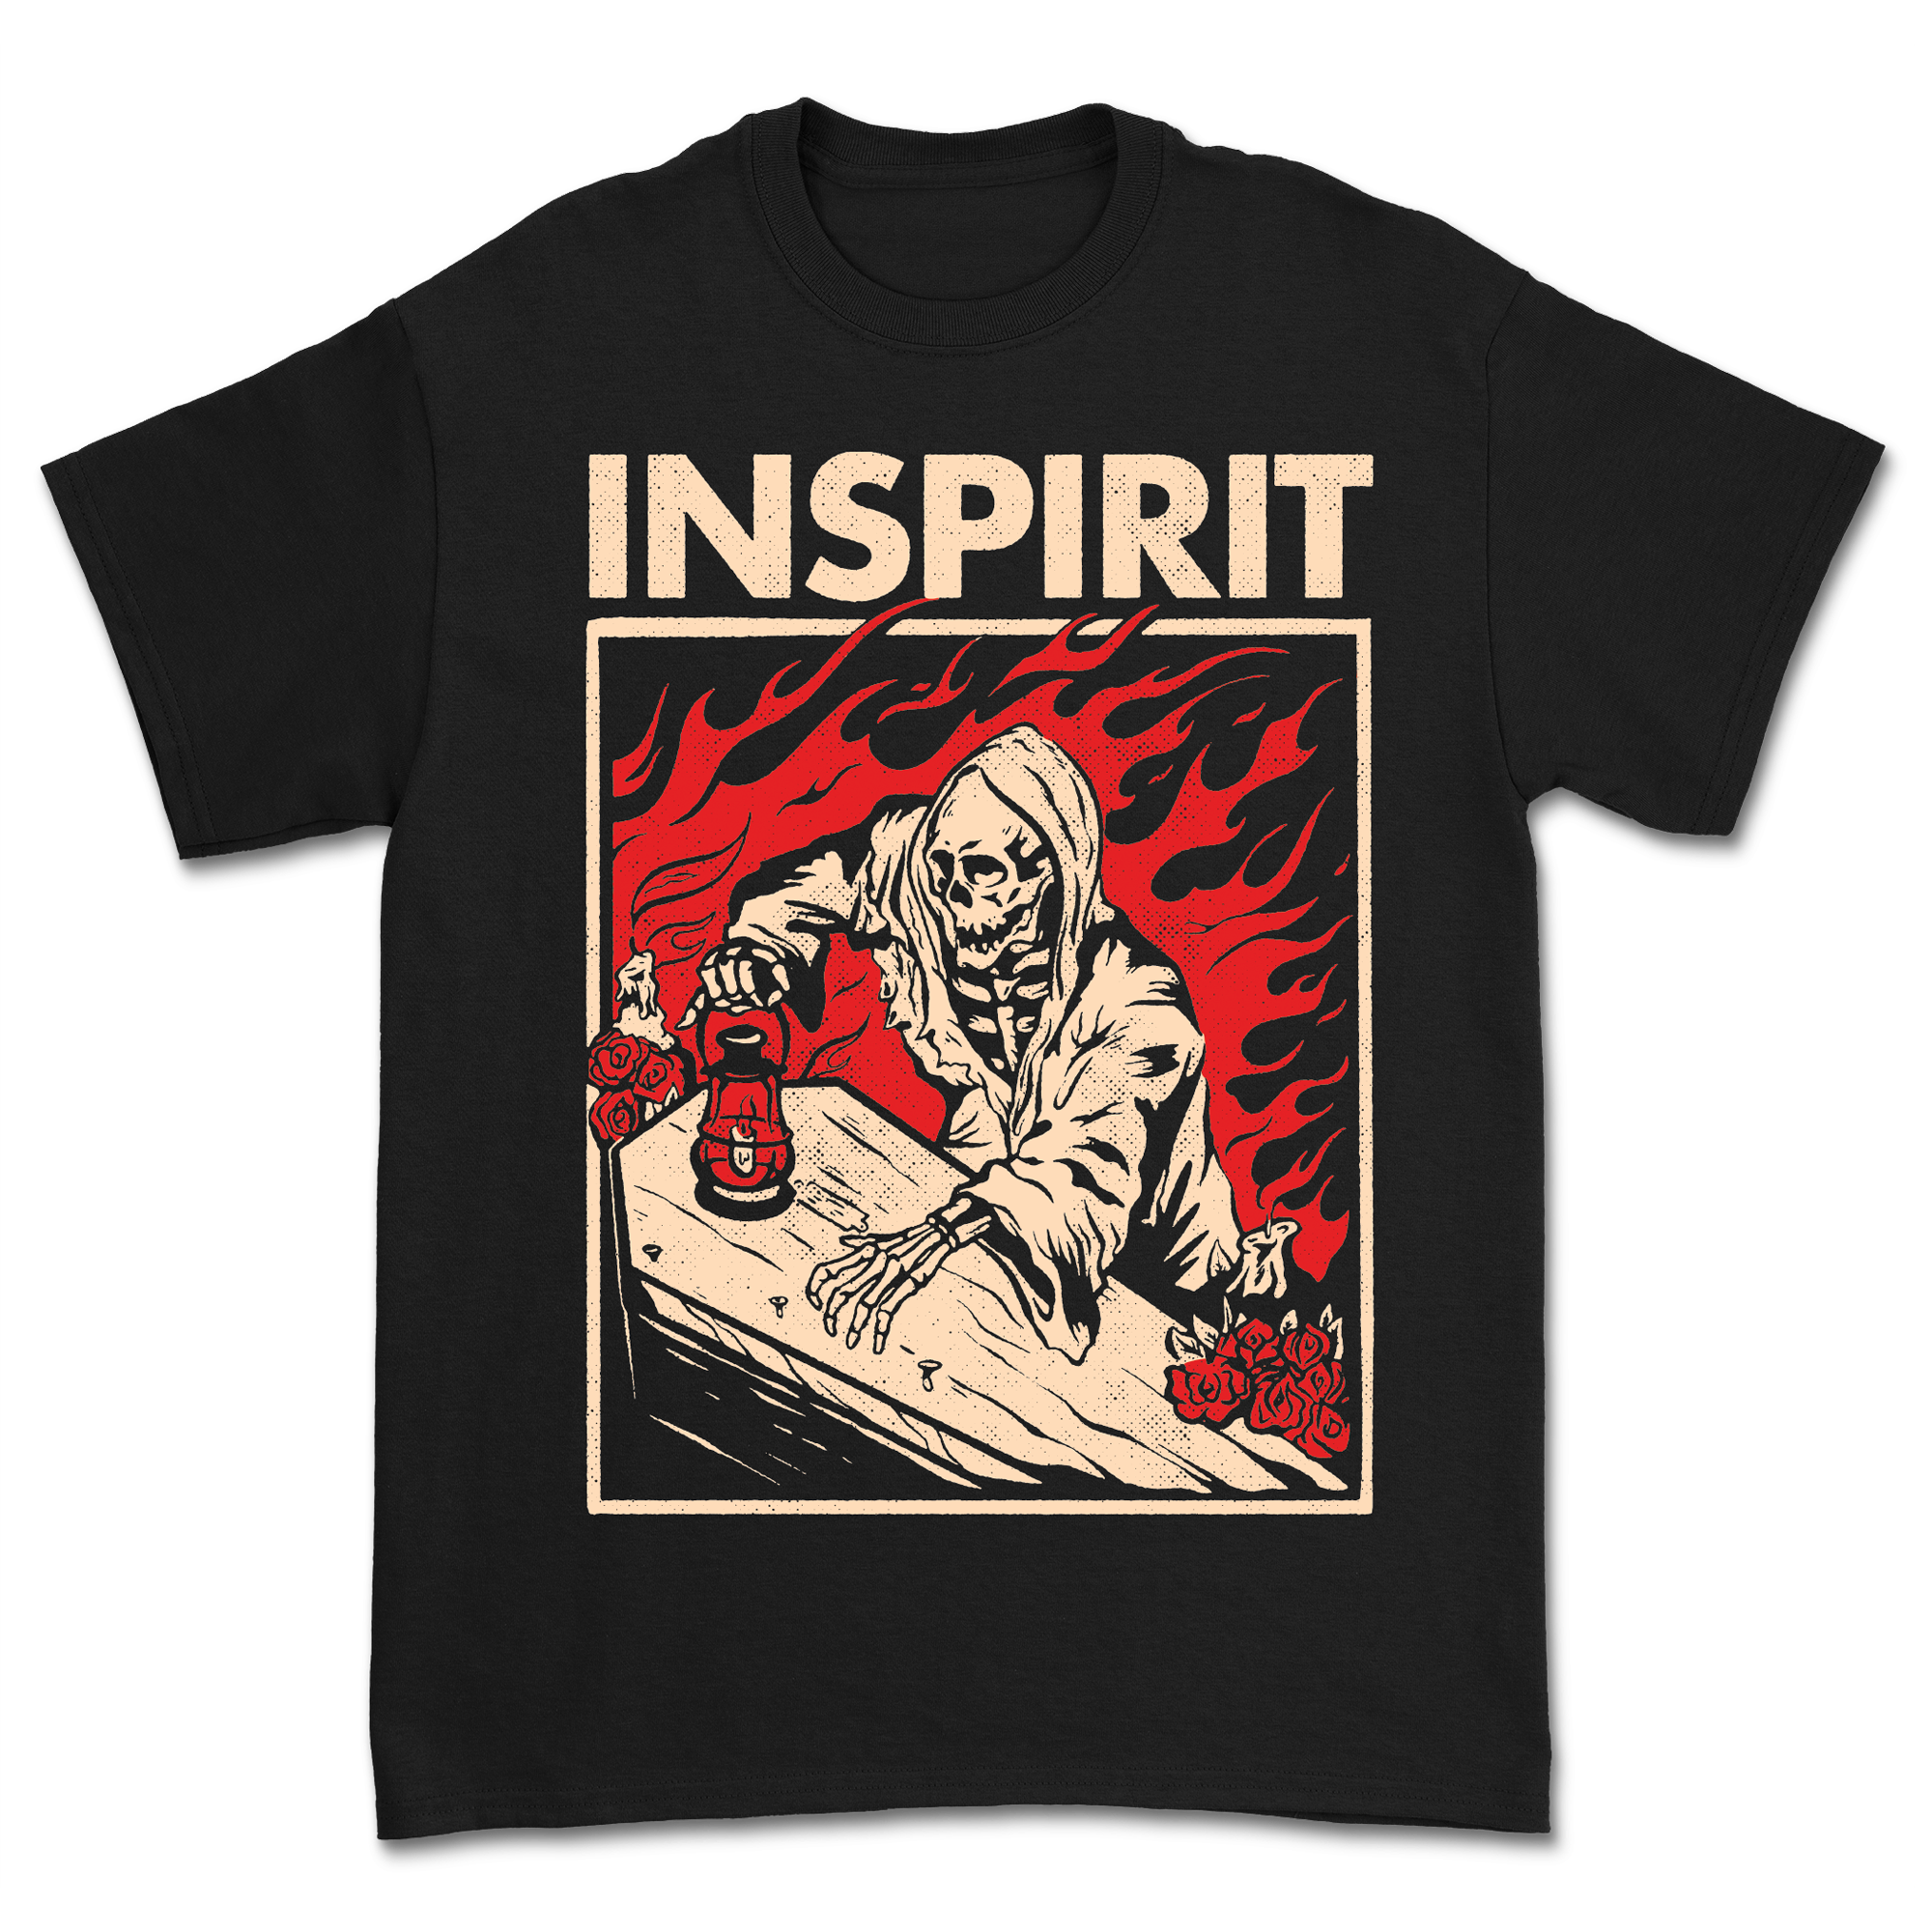 Inspirit - Reaper T-Shirt